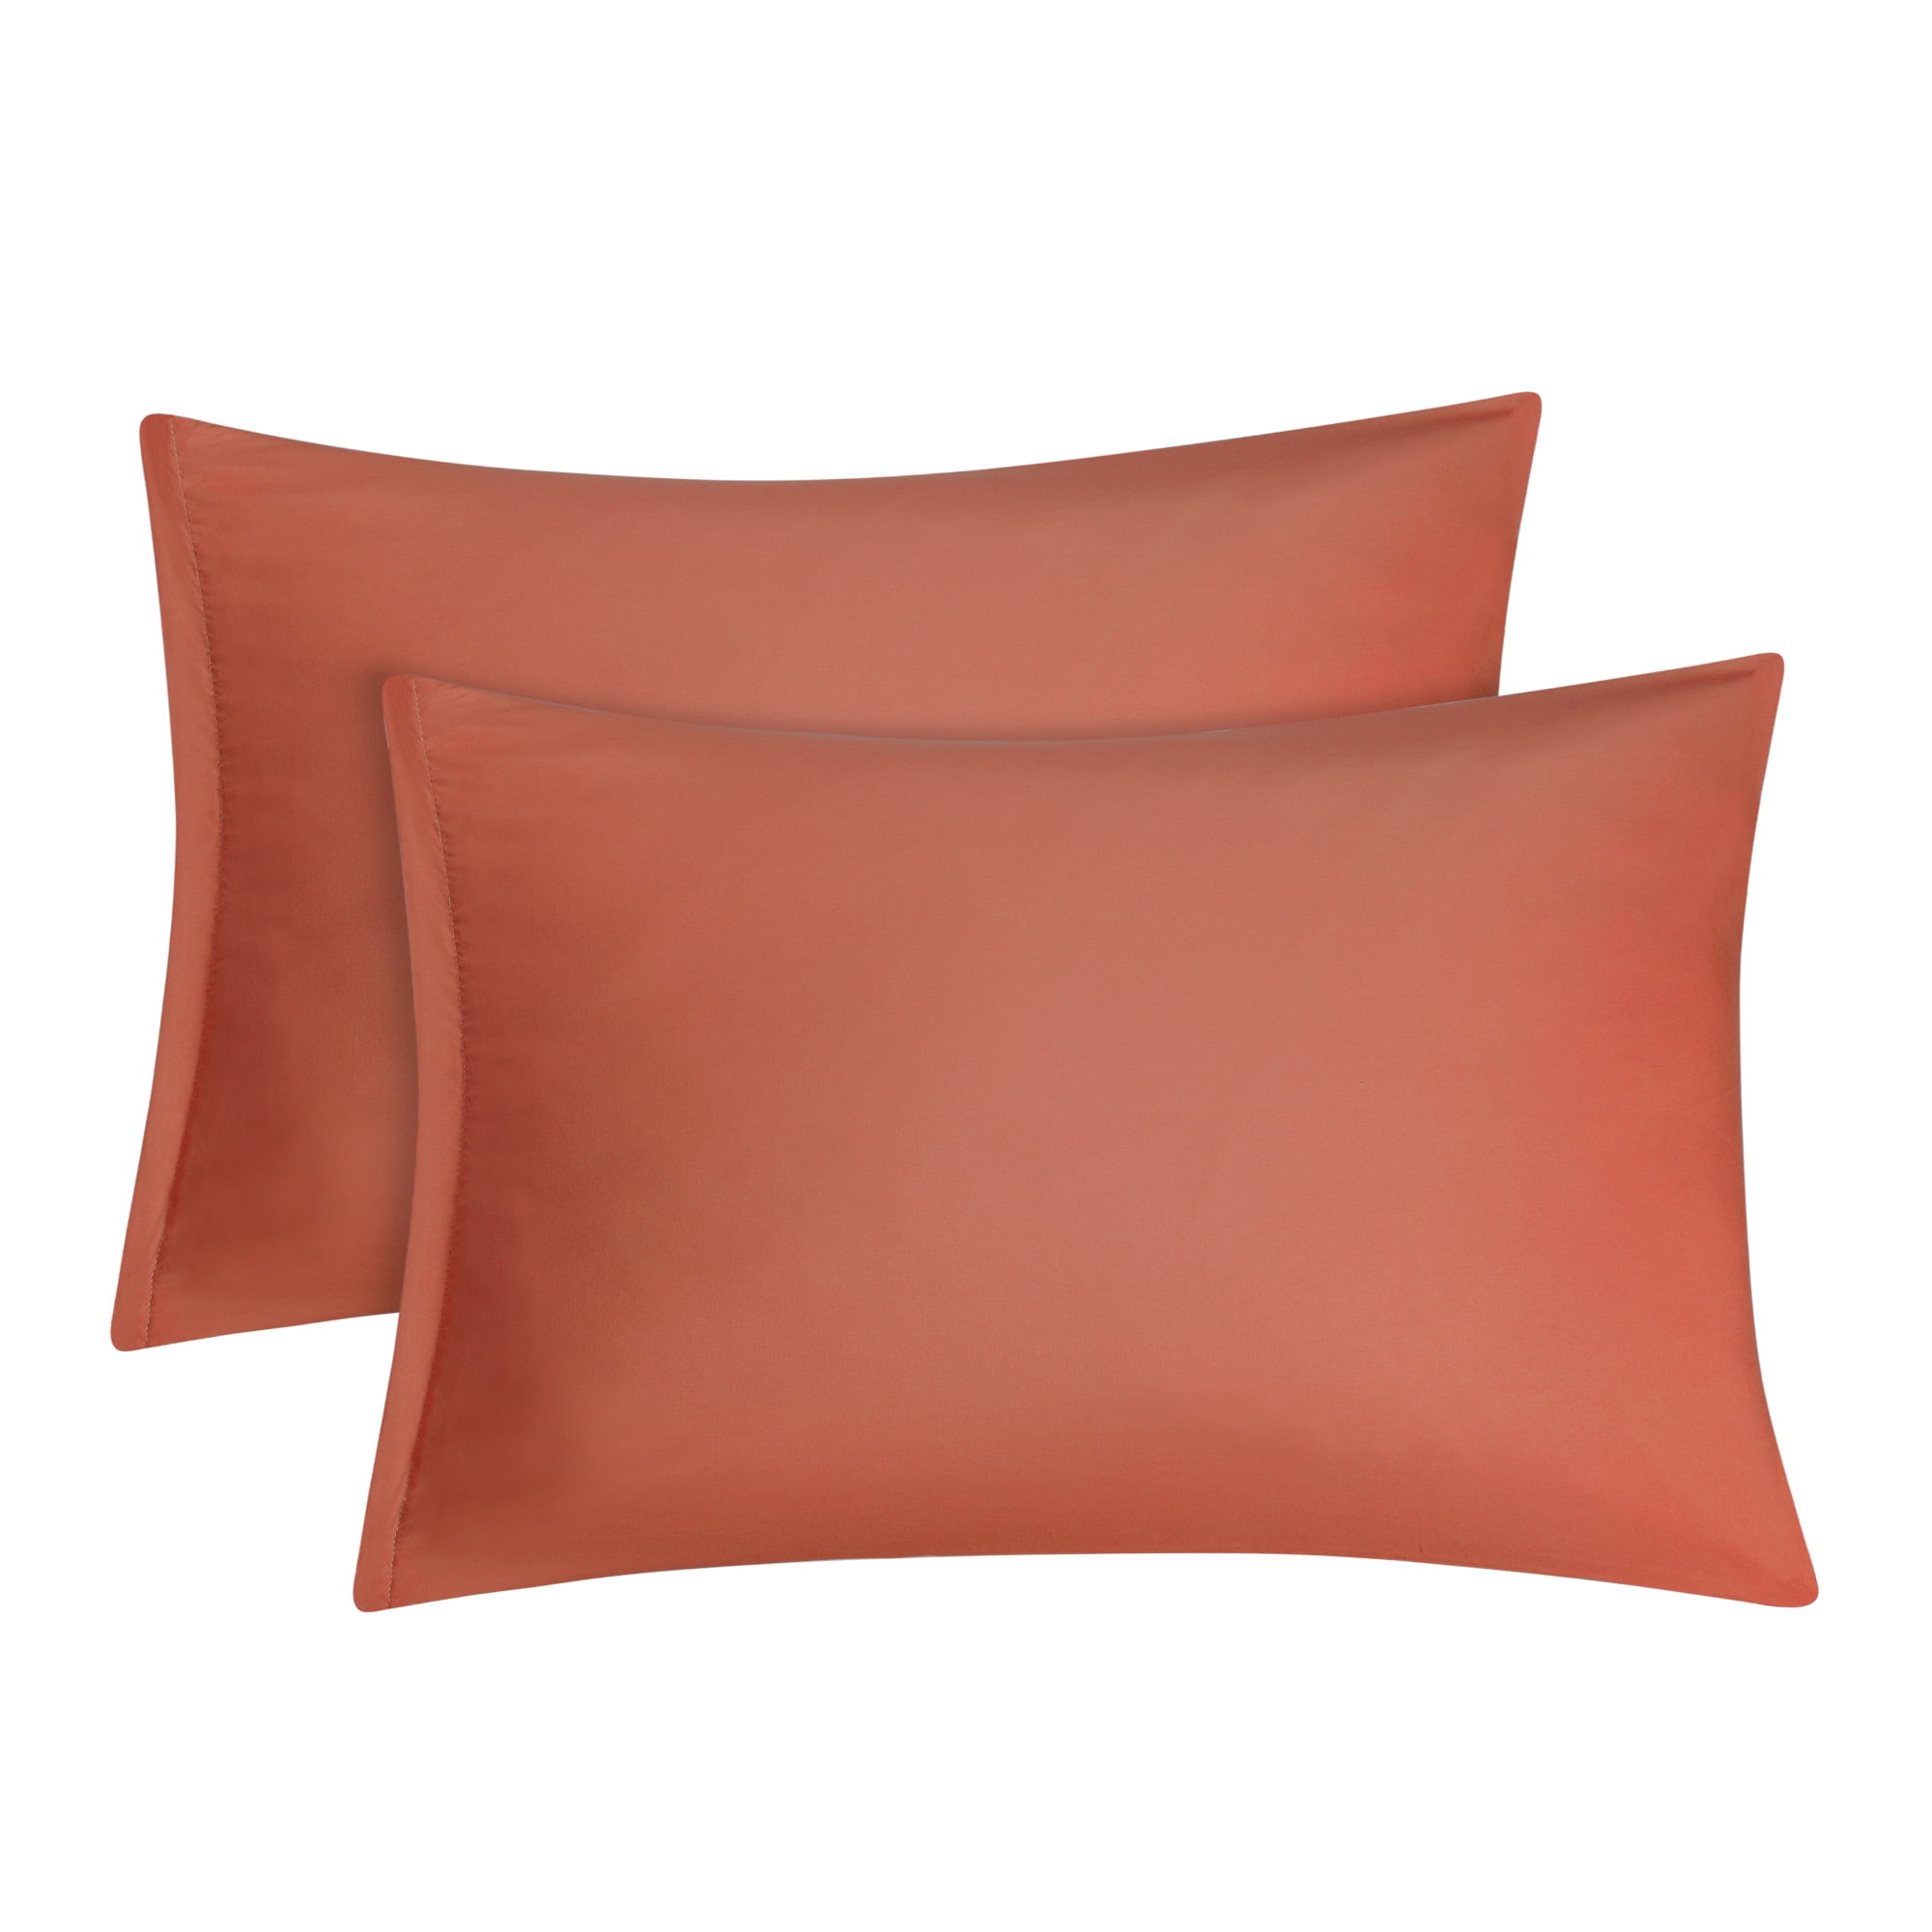 4 Pairs 20*30'' Zipper Pillow Cases Pillowcase Cover Microfiber Standard Size US 